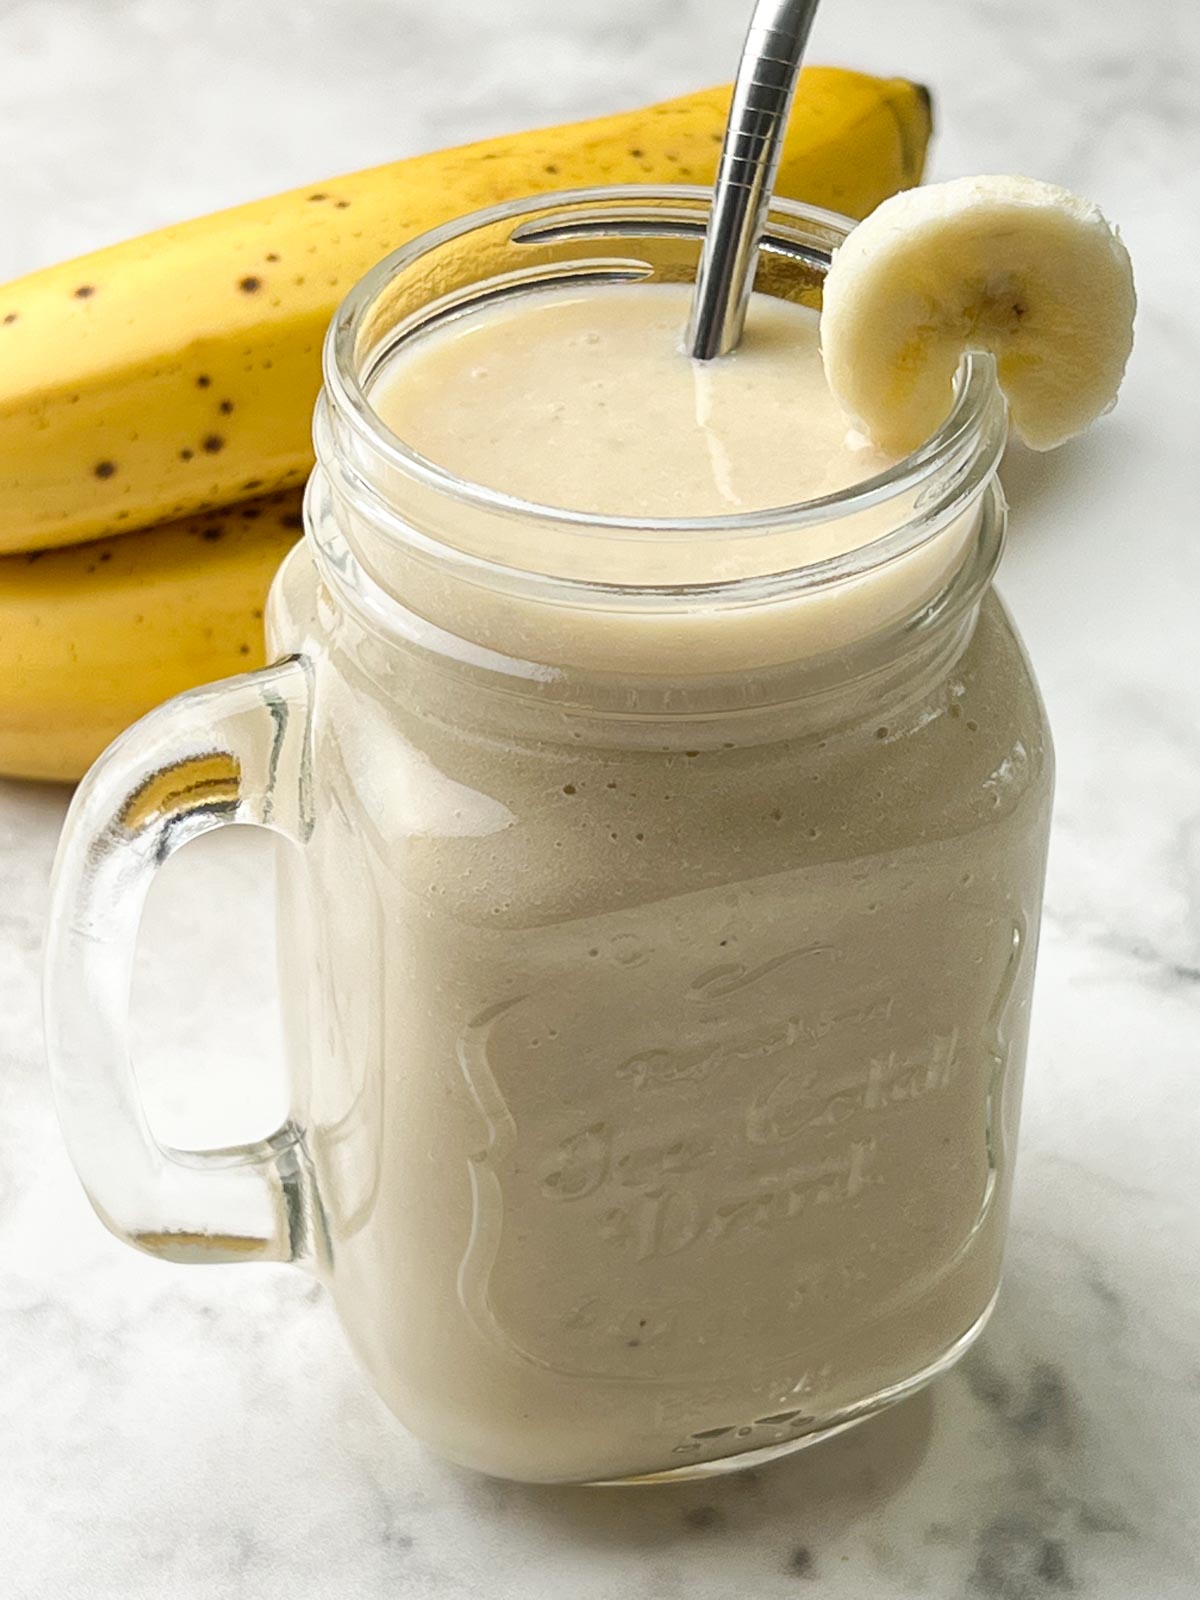 creamy banana juice recipe served in a mason jar garnished with banana slice and ripe banana on the side